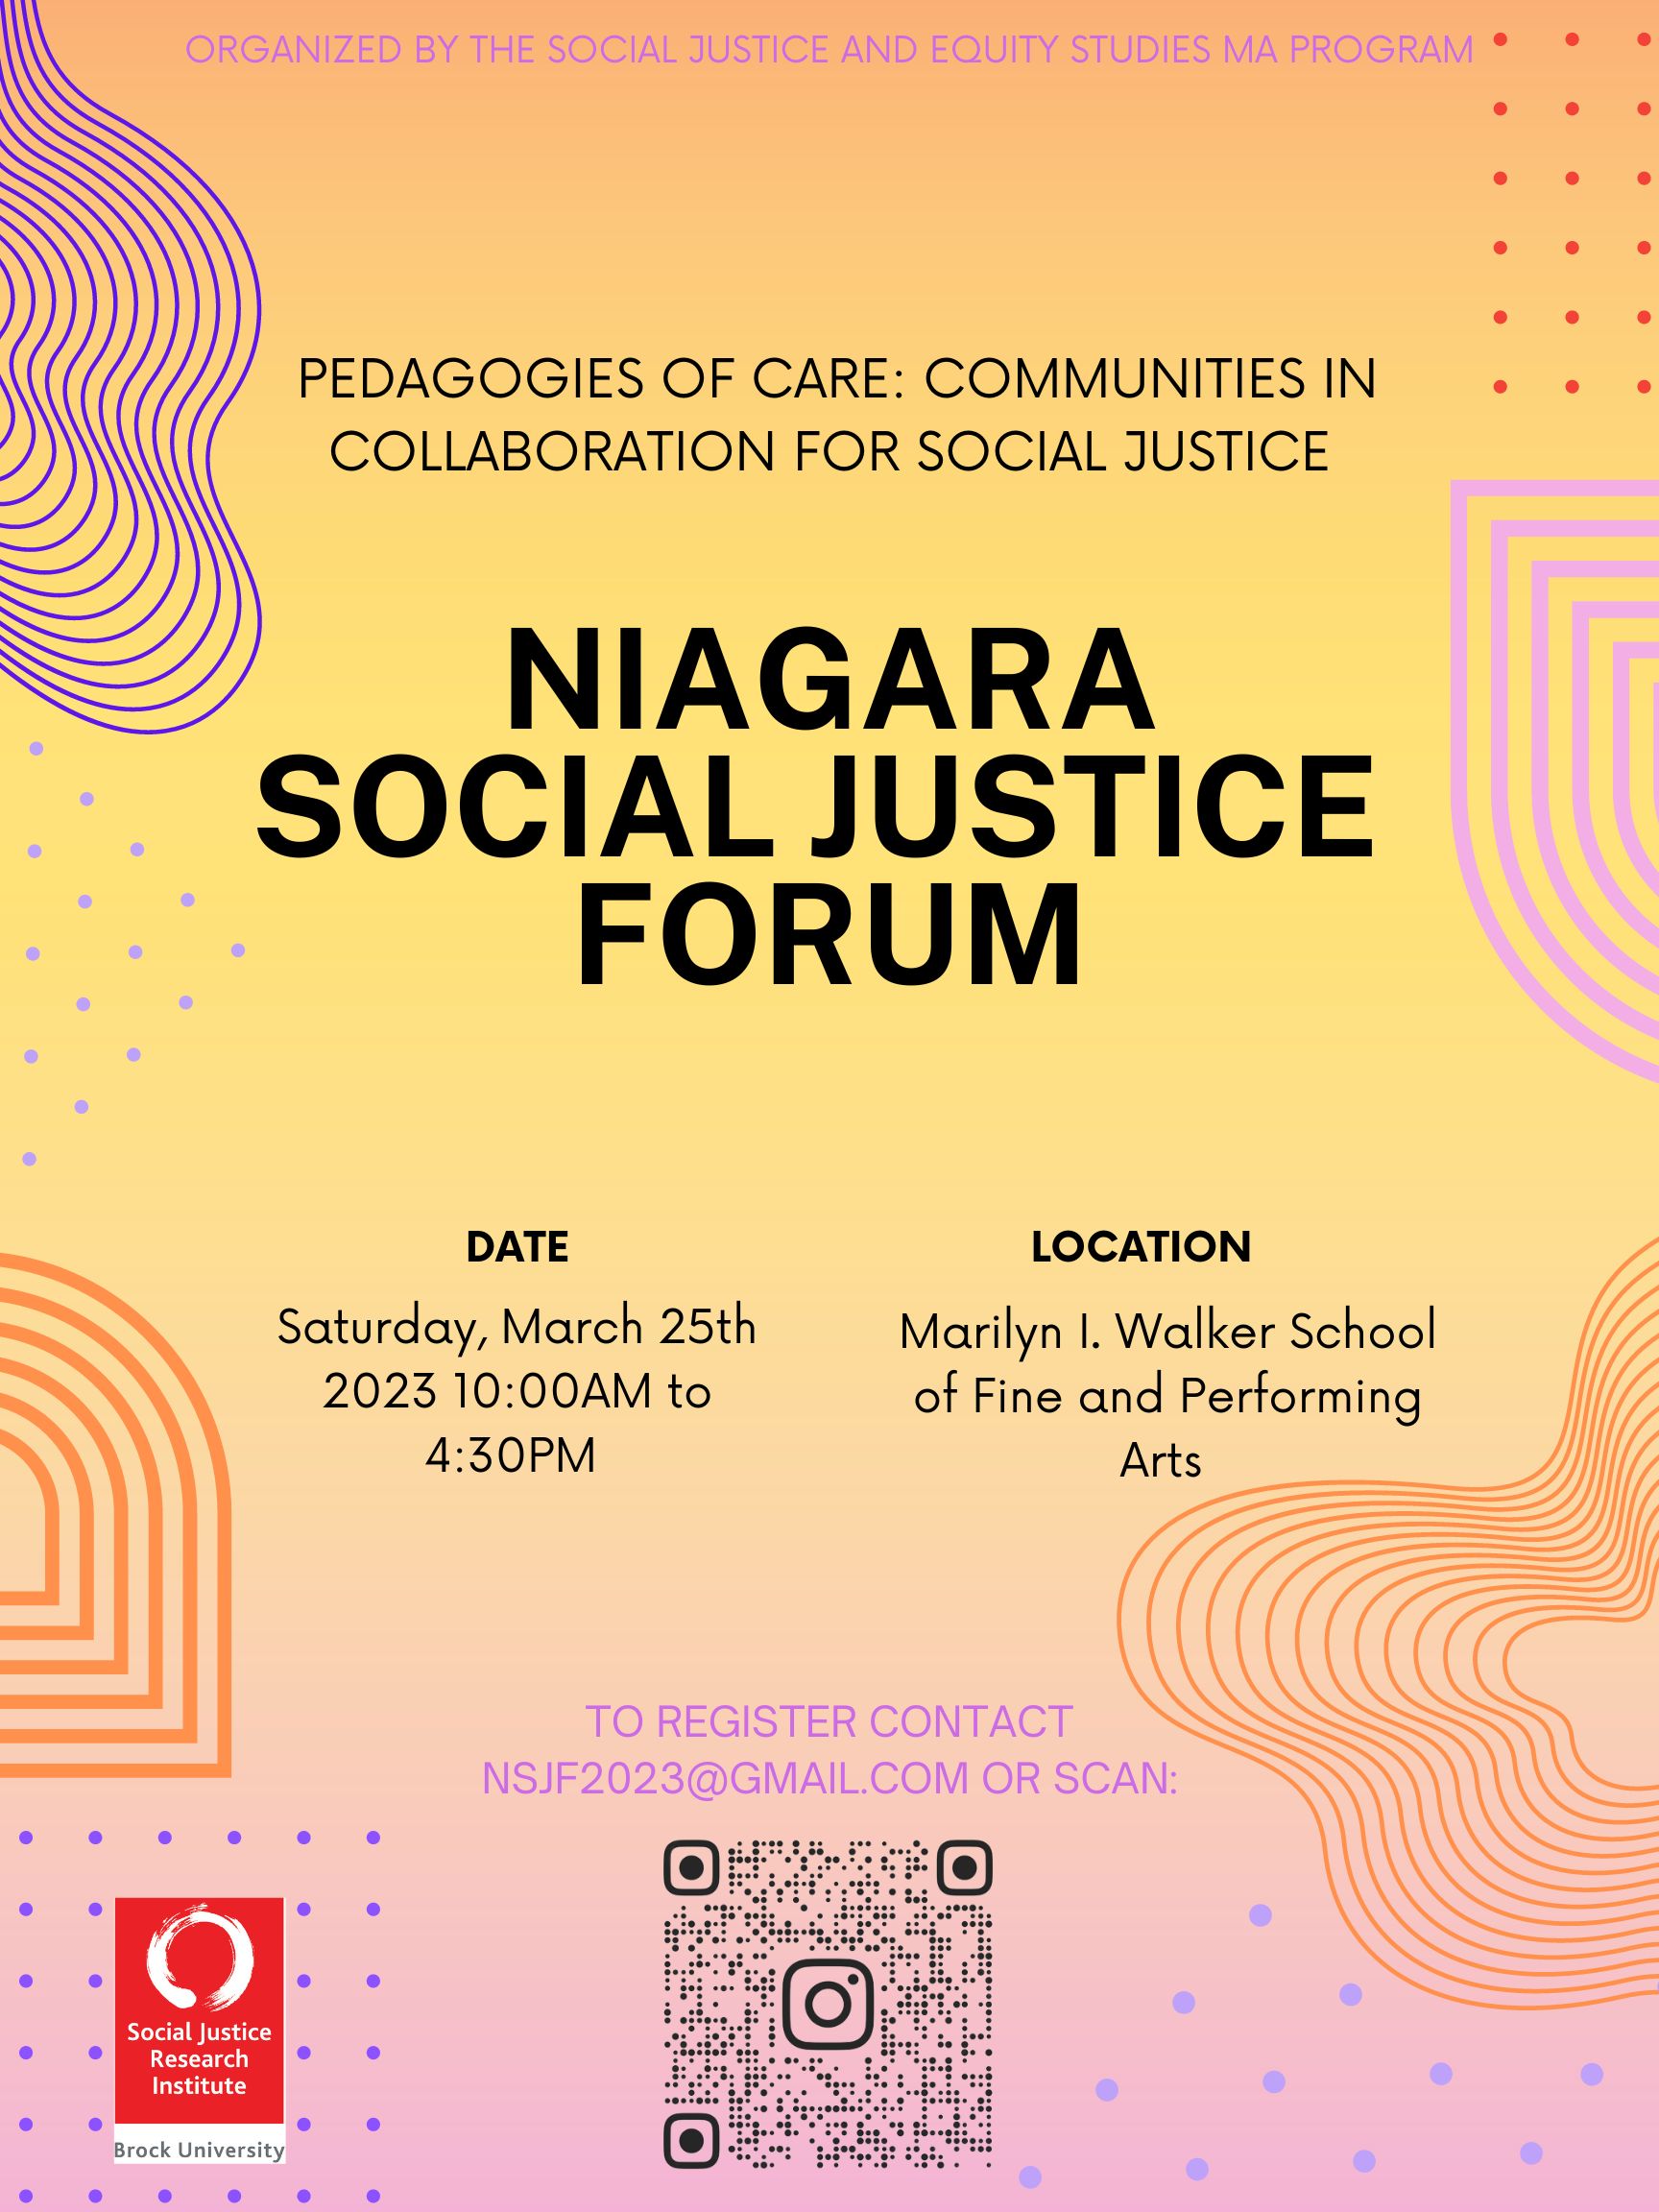 Niagara Social Justice Forum @ Marilyn I. Walker School of Fine and Performing Arts